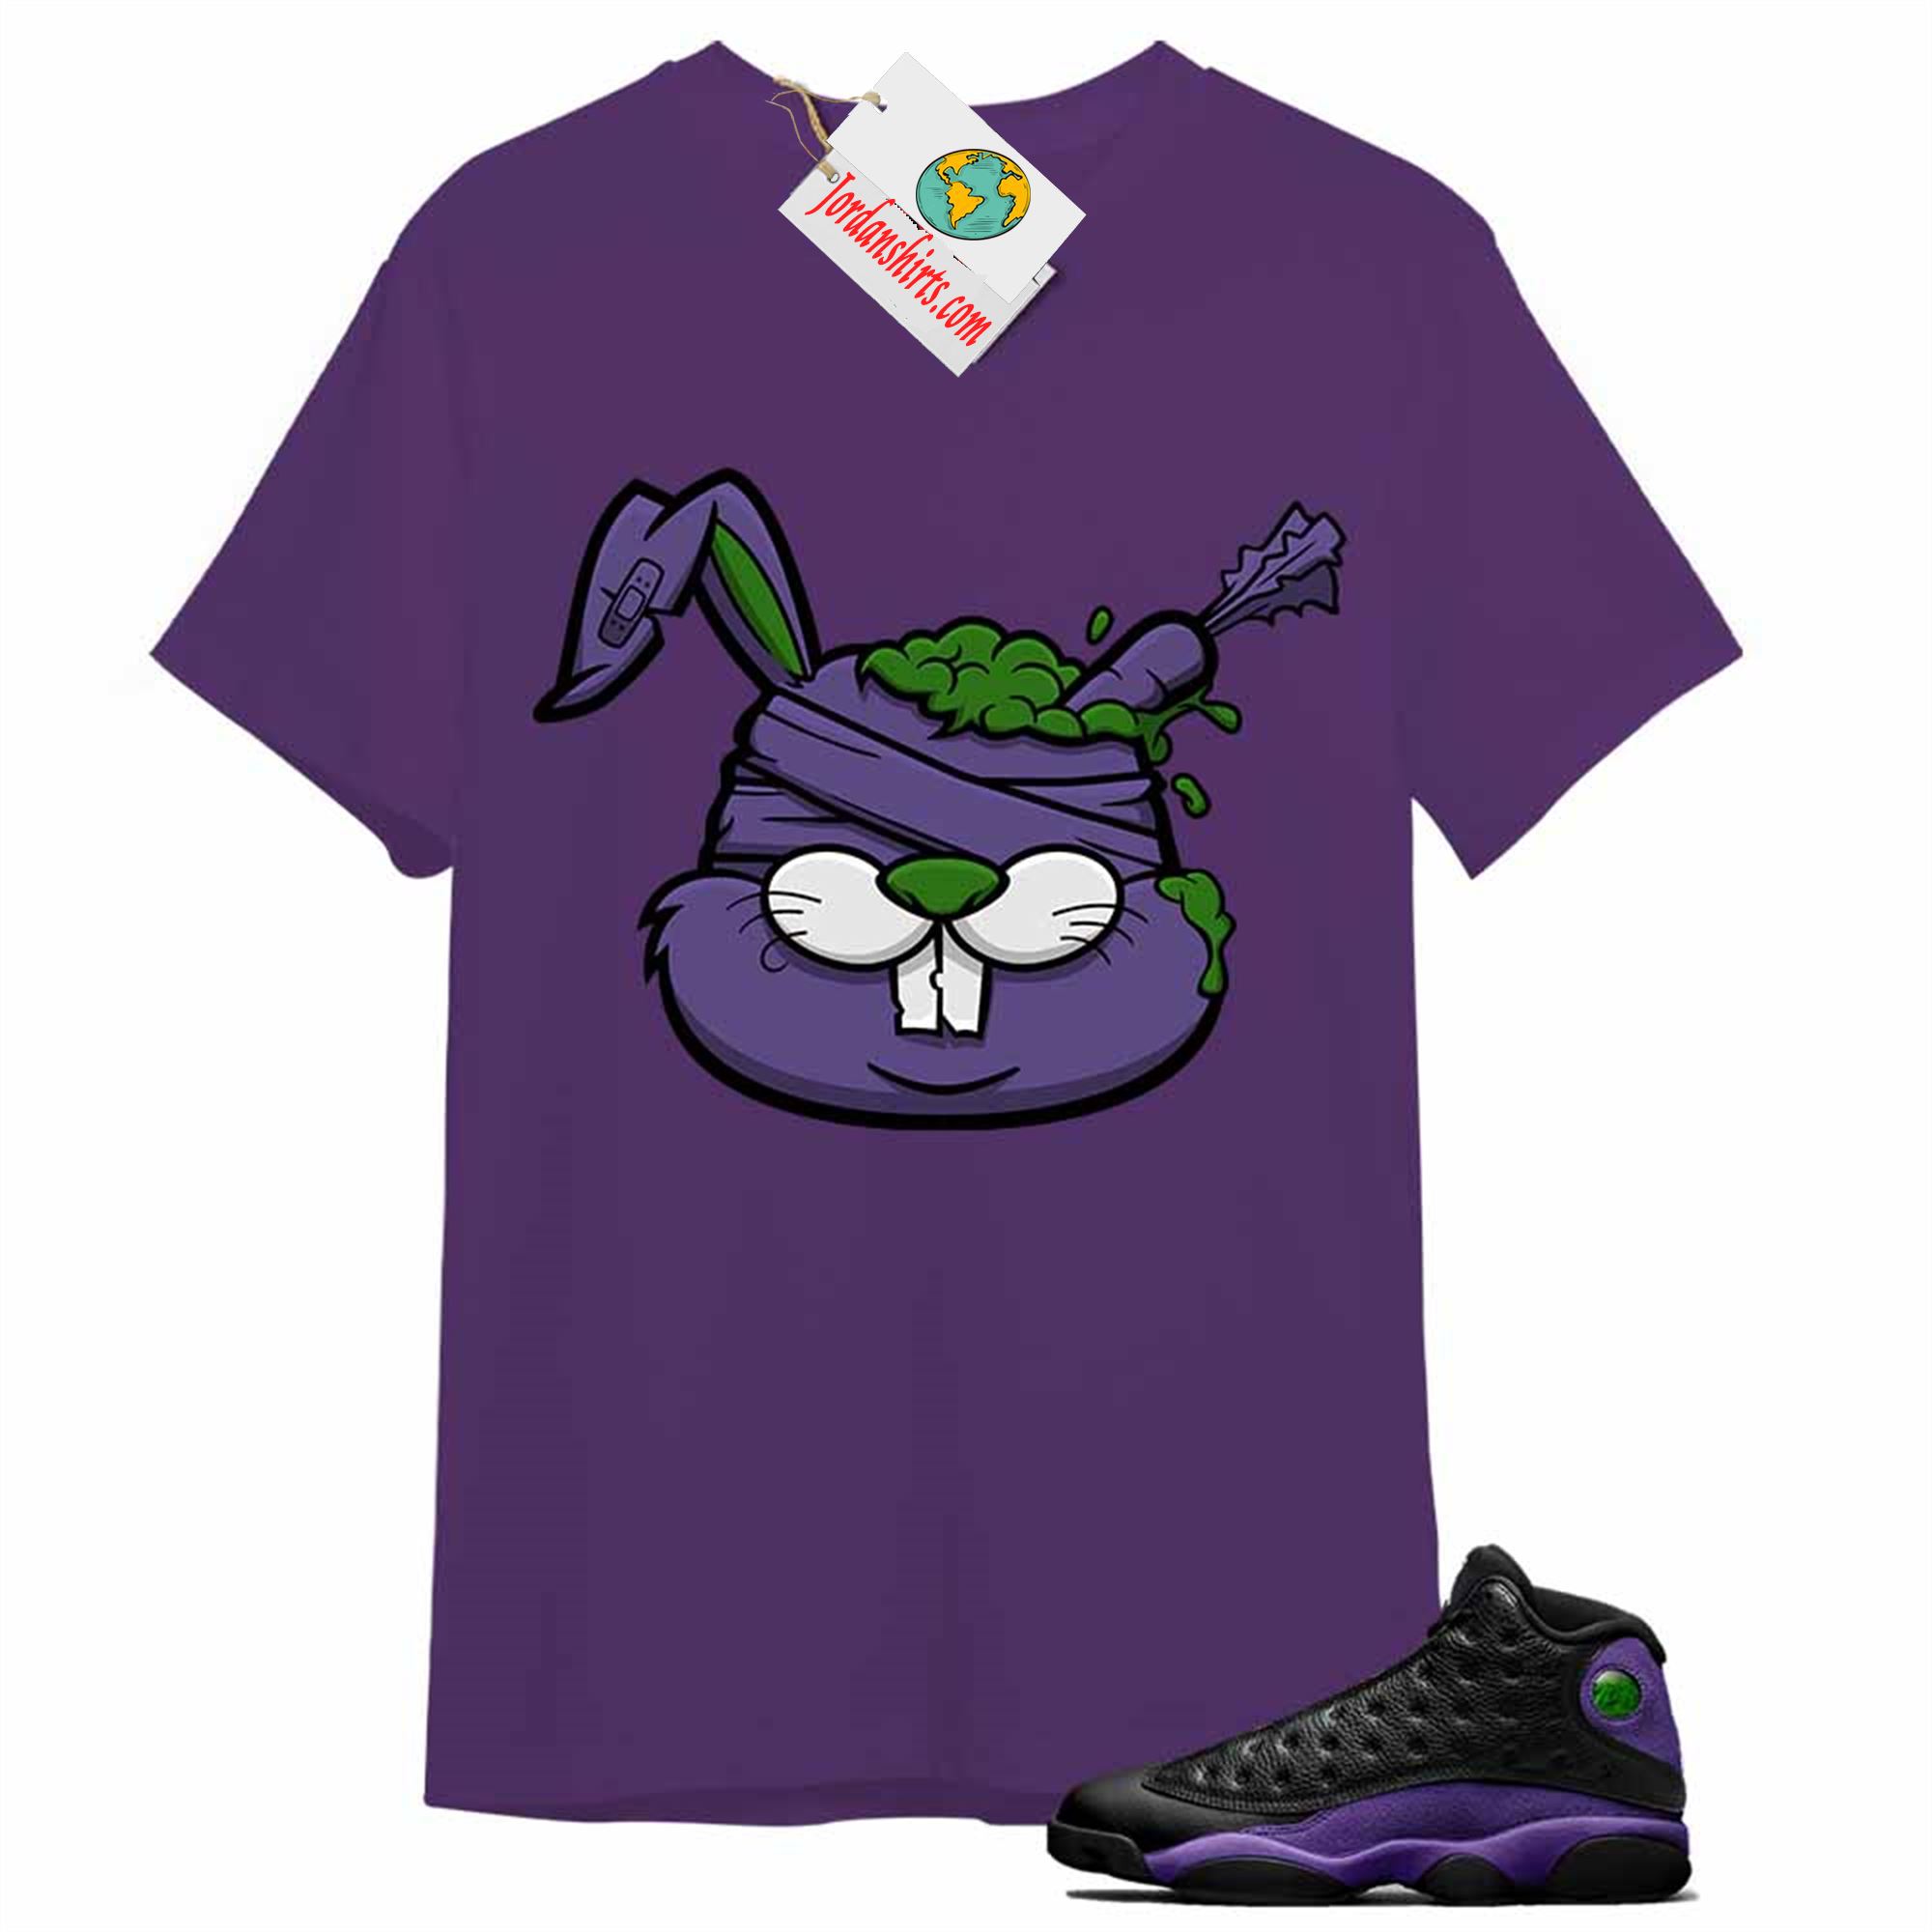 Jordan 13 Shirt, Zombie Bunny Purple T-shirt Air Jordan 13 Court Purple 13s Full Size Up To 5xl